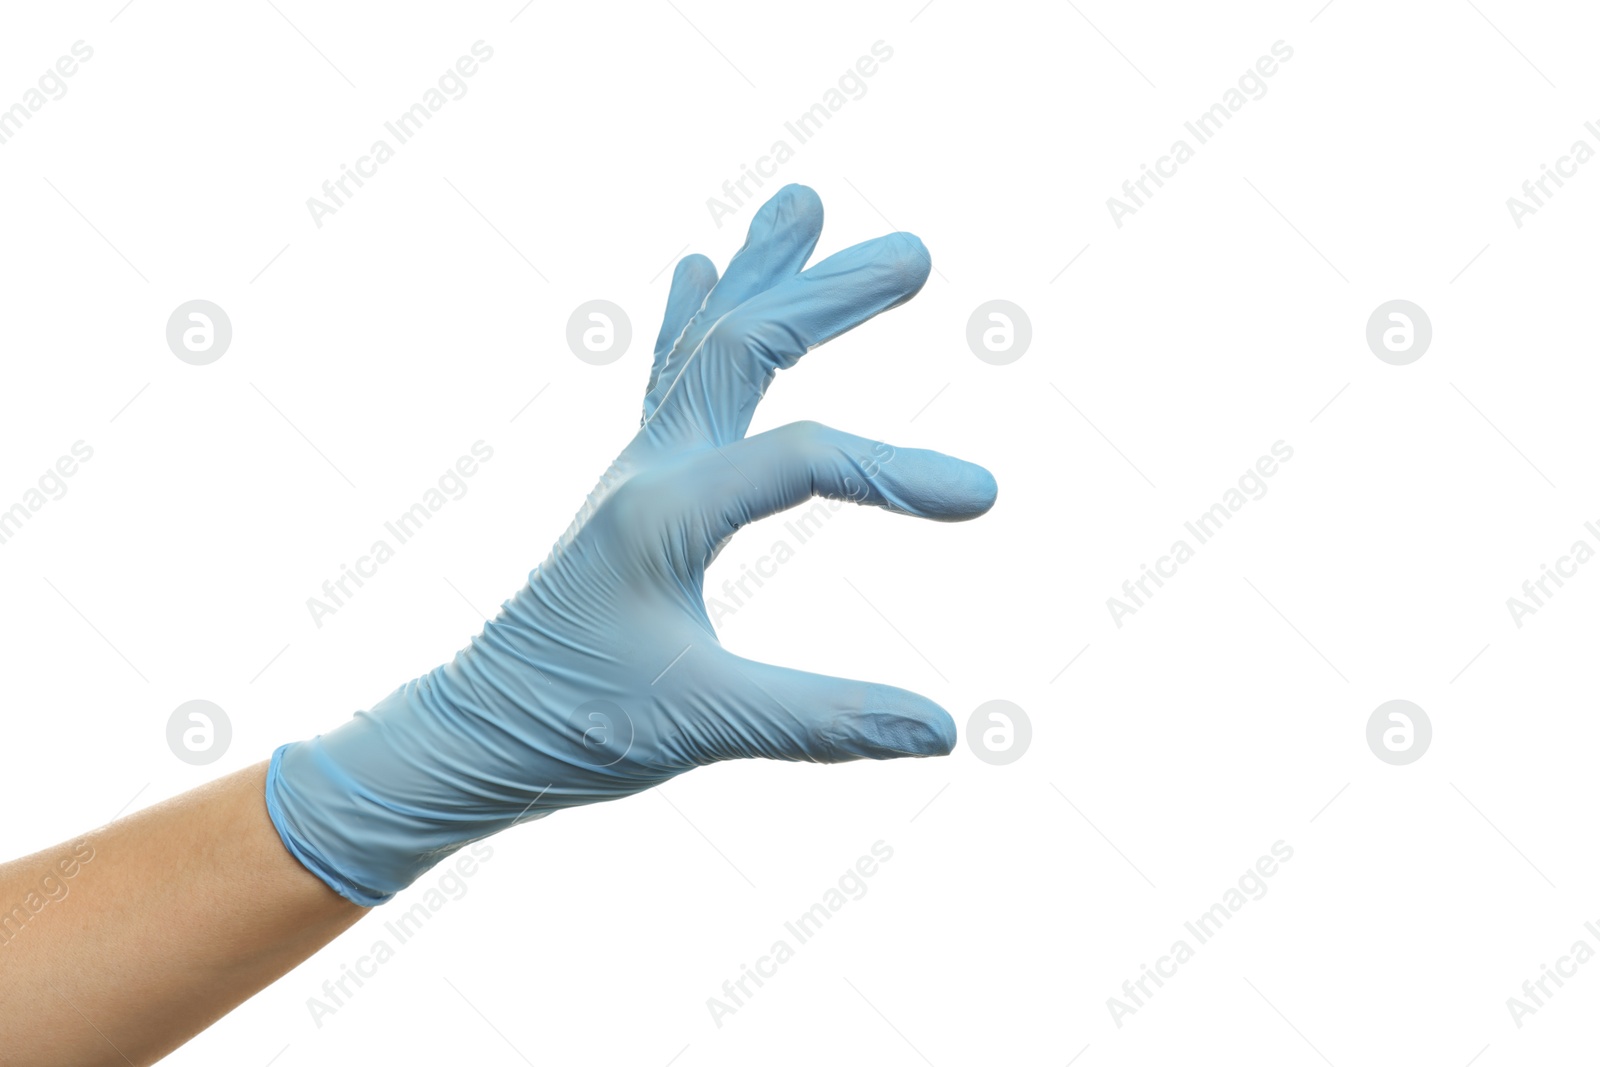 Photo of Doctor wearing light blue medical glove holding something on white background, closeup